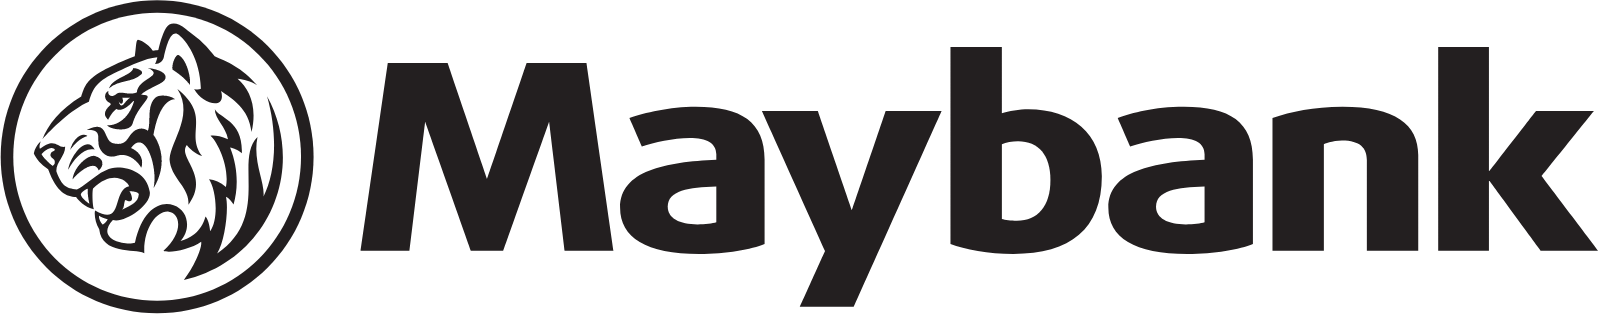 Maybank logo large (transparent PNG)